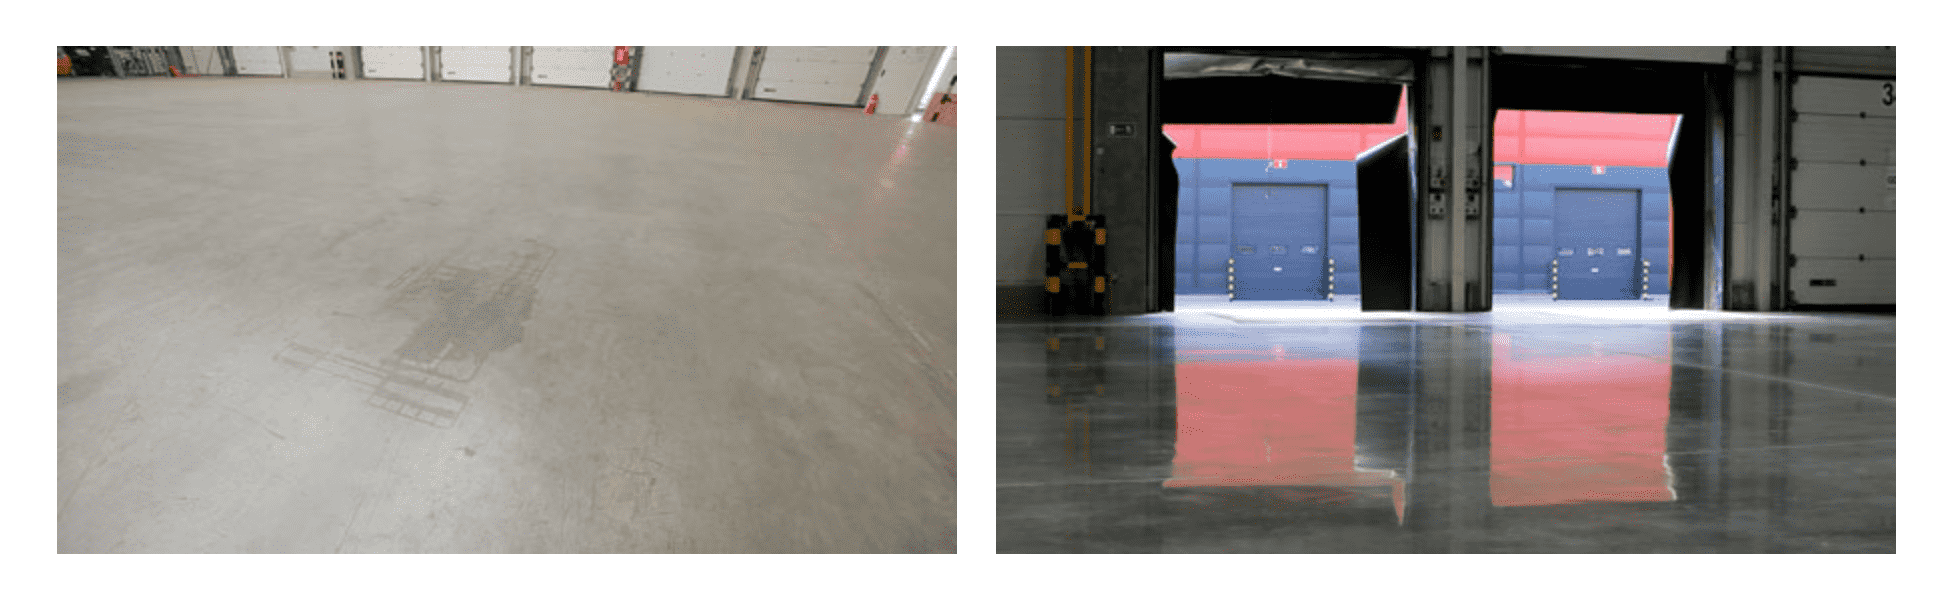 polishing industrial concrete floors in warehouses, plants